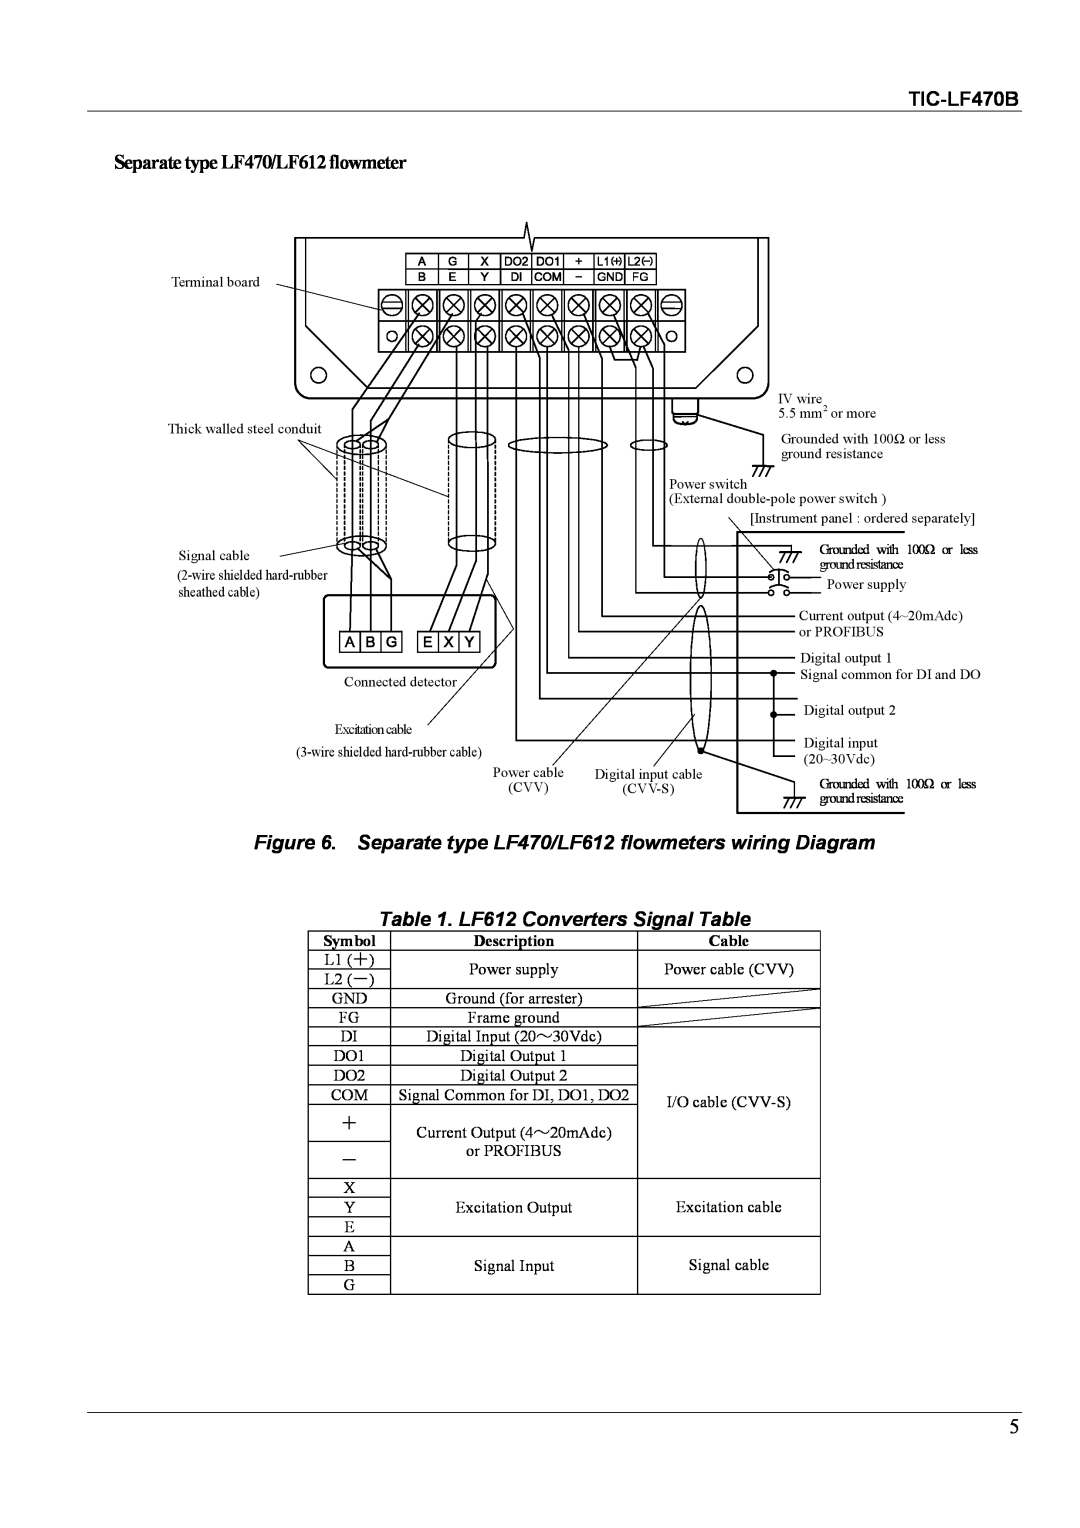 Toshiba specifications LF612 Converters Signal Table, TIC-LF470B, Separate type LF470/LF612 flowmeter 